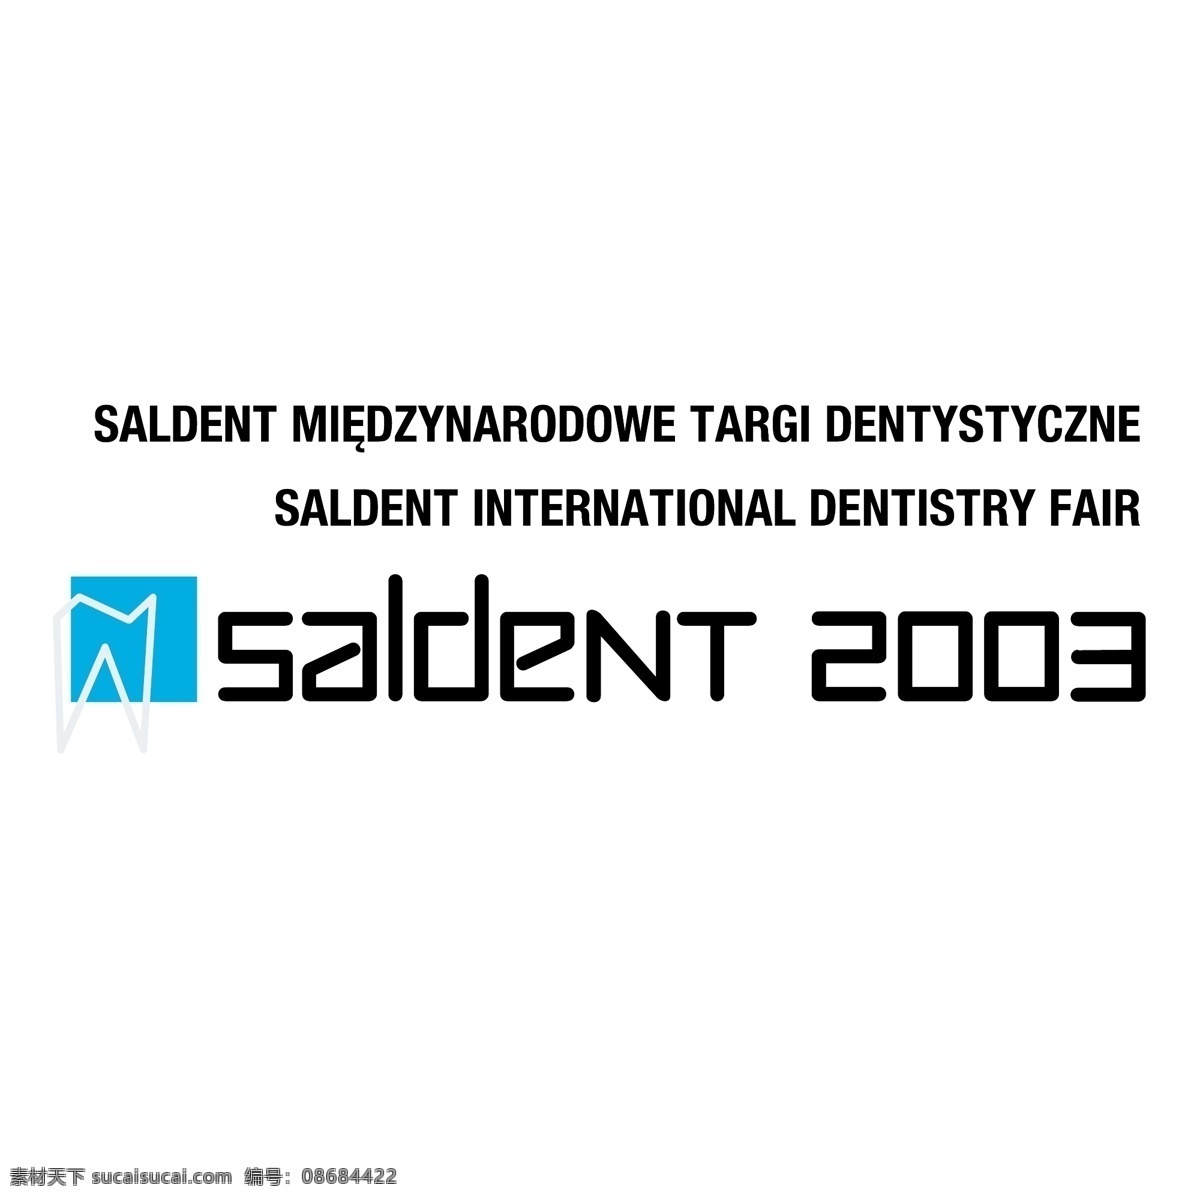 office saldent 2003 向量 办公室 标志 微软 2003下载 橄榄球 世界 cur 矢量 矢量图 建筑家居